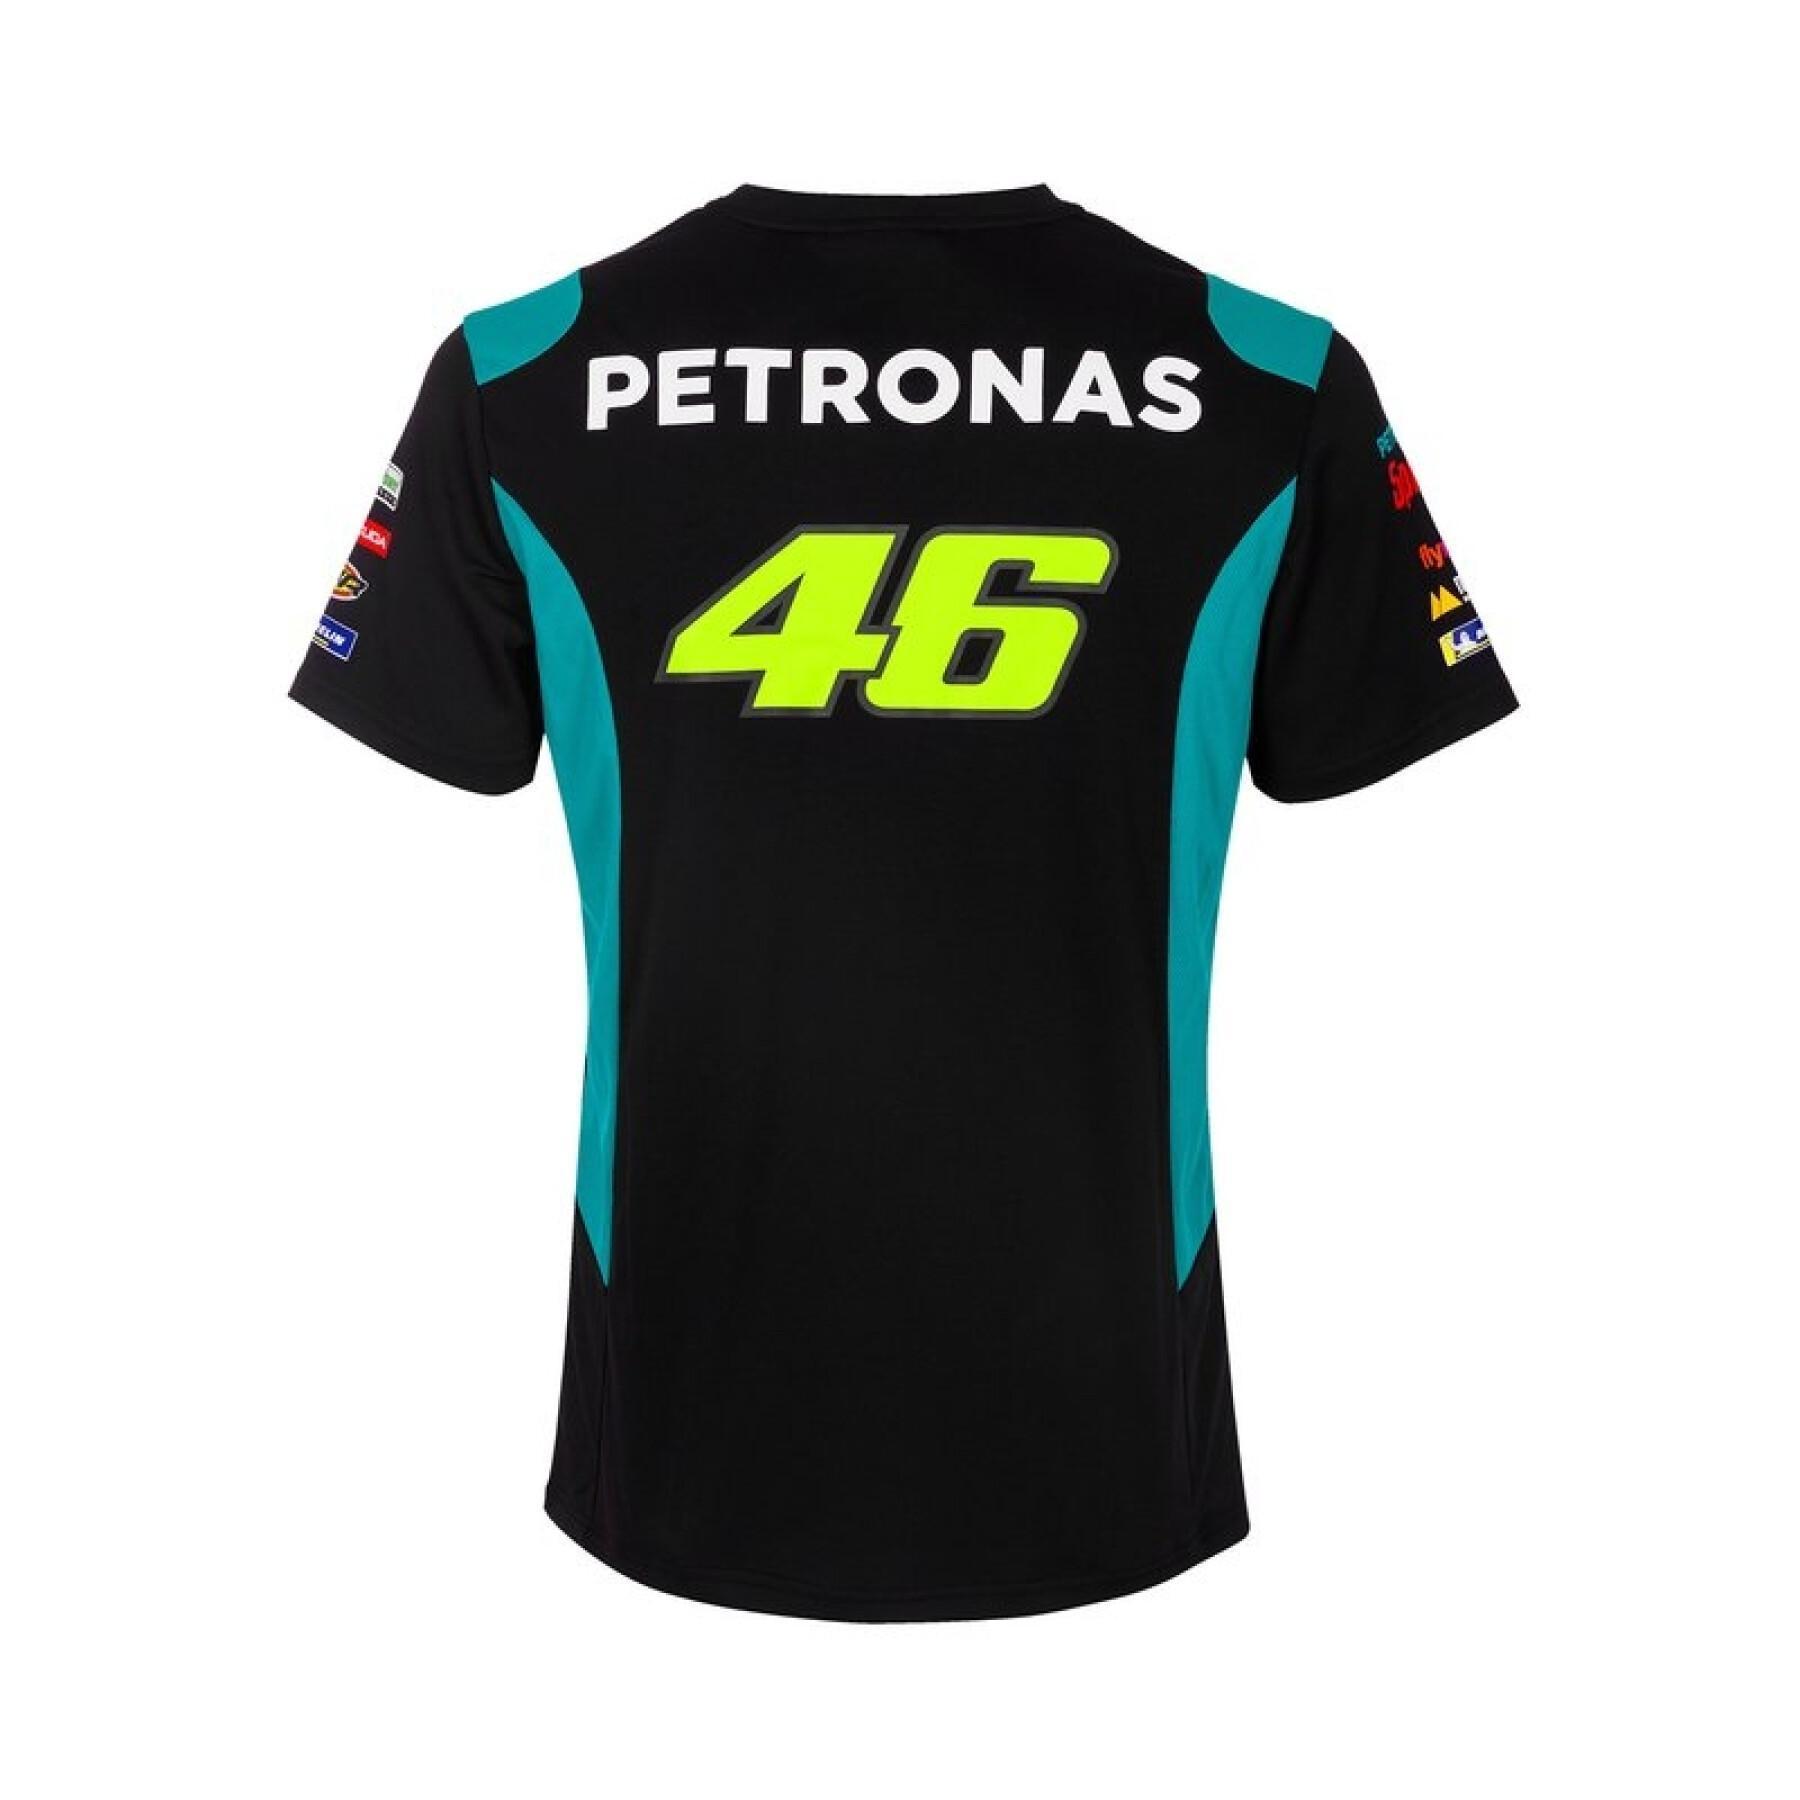 T-shirt VRl46 Petronas morbidelli